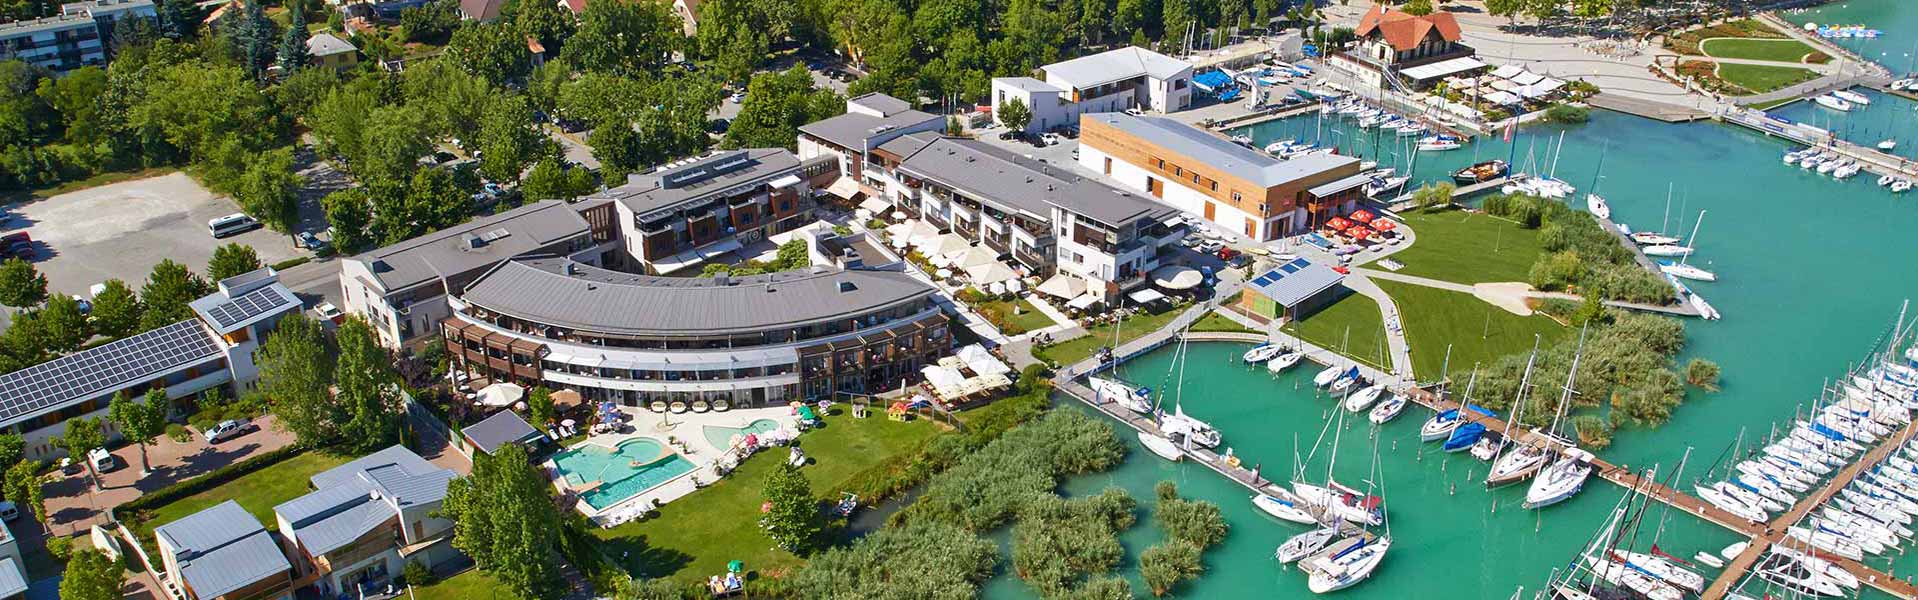 Wichtige informationen :: Hotel Golden Lake Resort